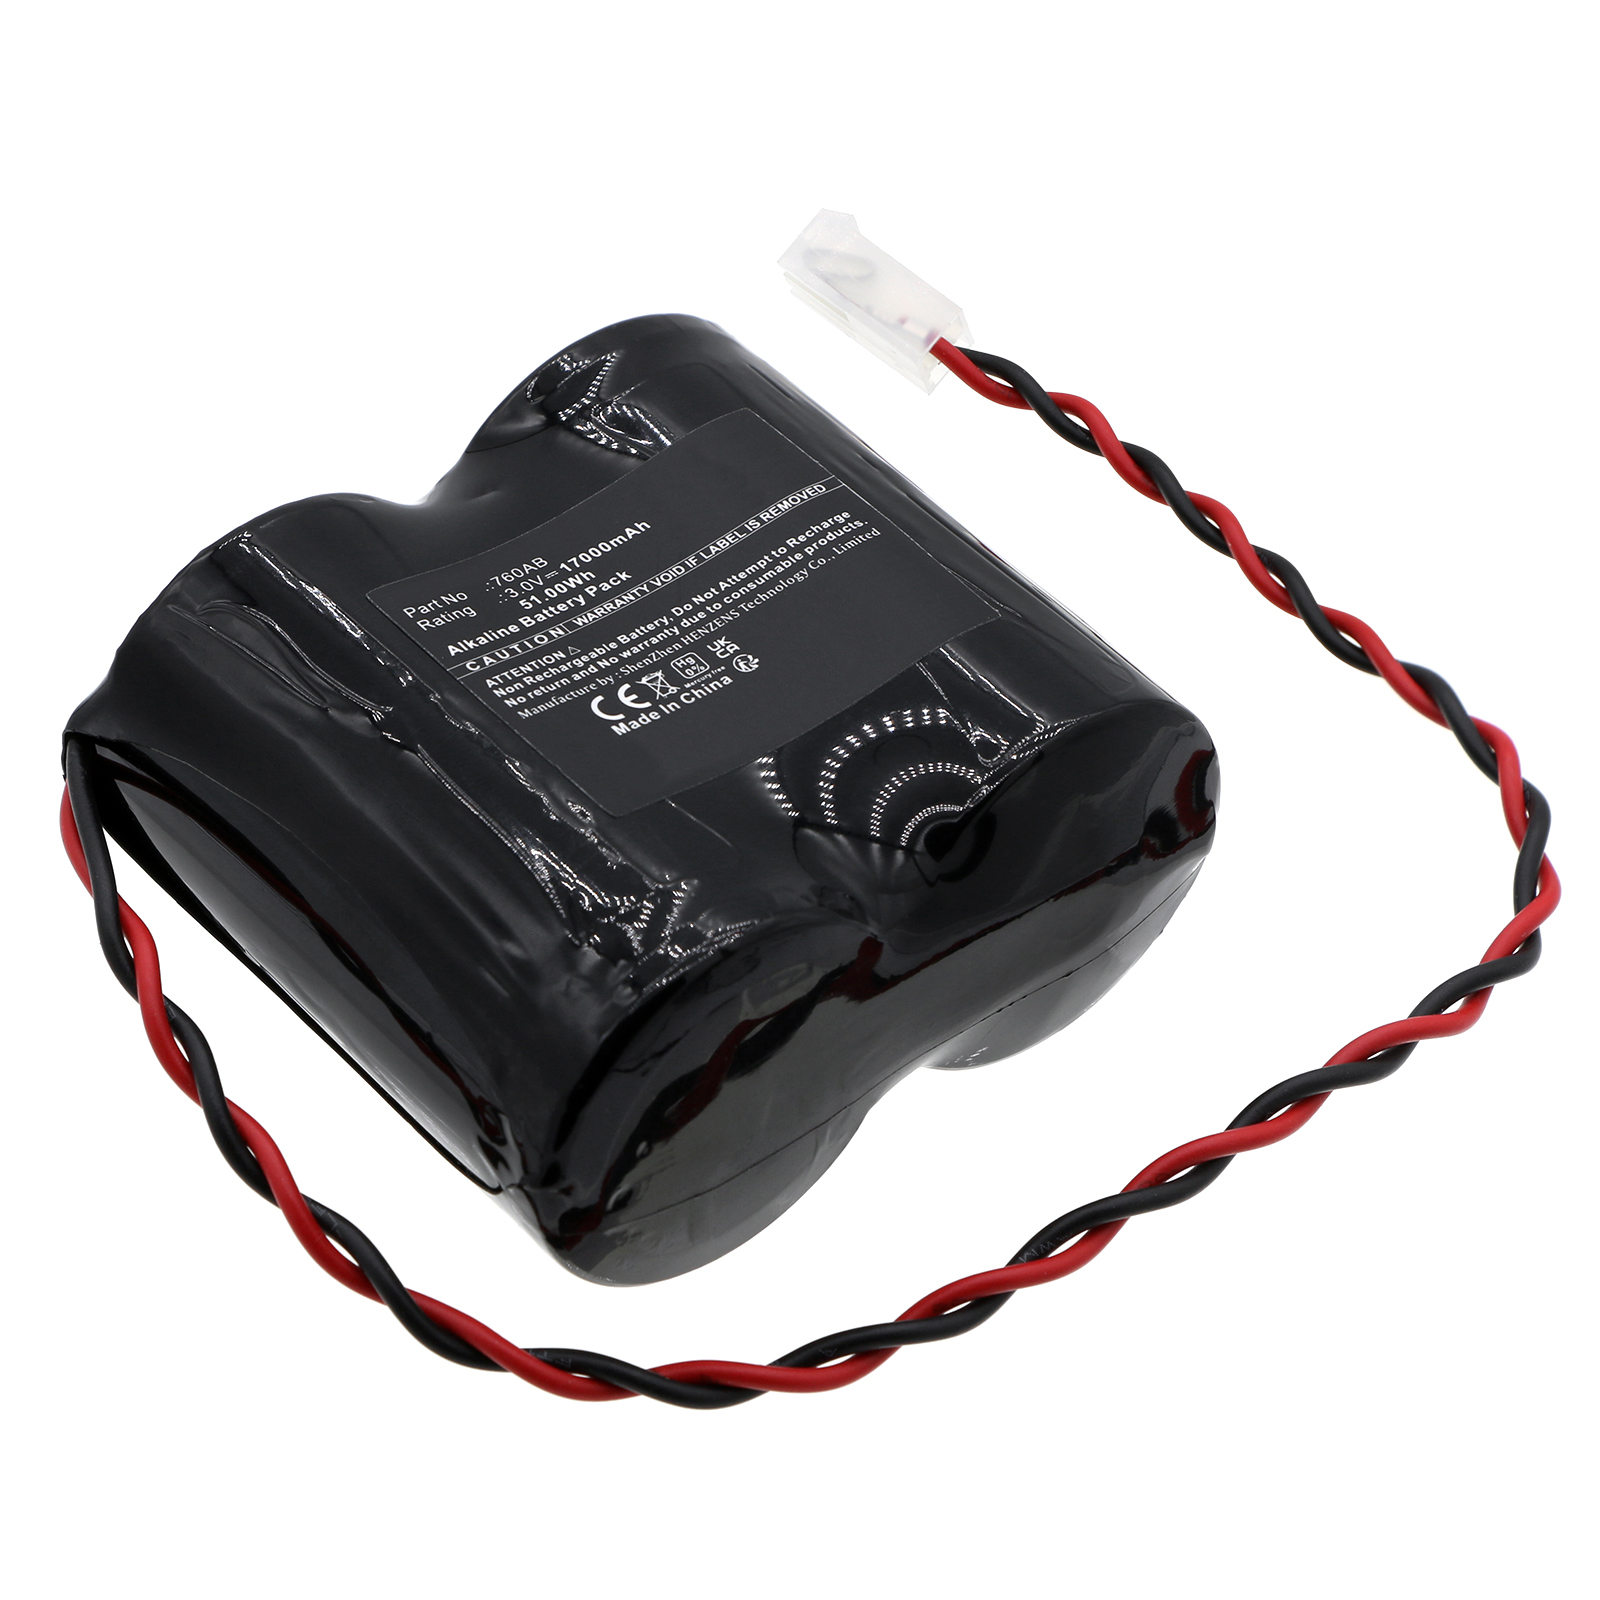 Synergy Digital Alarm System Battery, Compatible with Abus 760AB Alarm System Battery (Alkaline, 3V, 17000mAh)